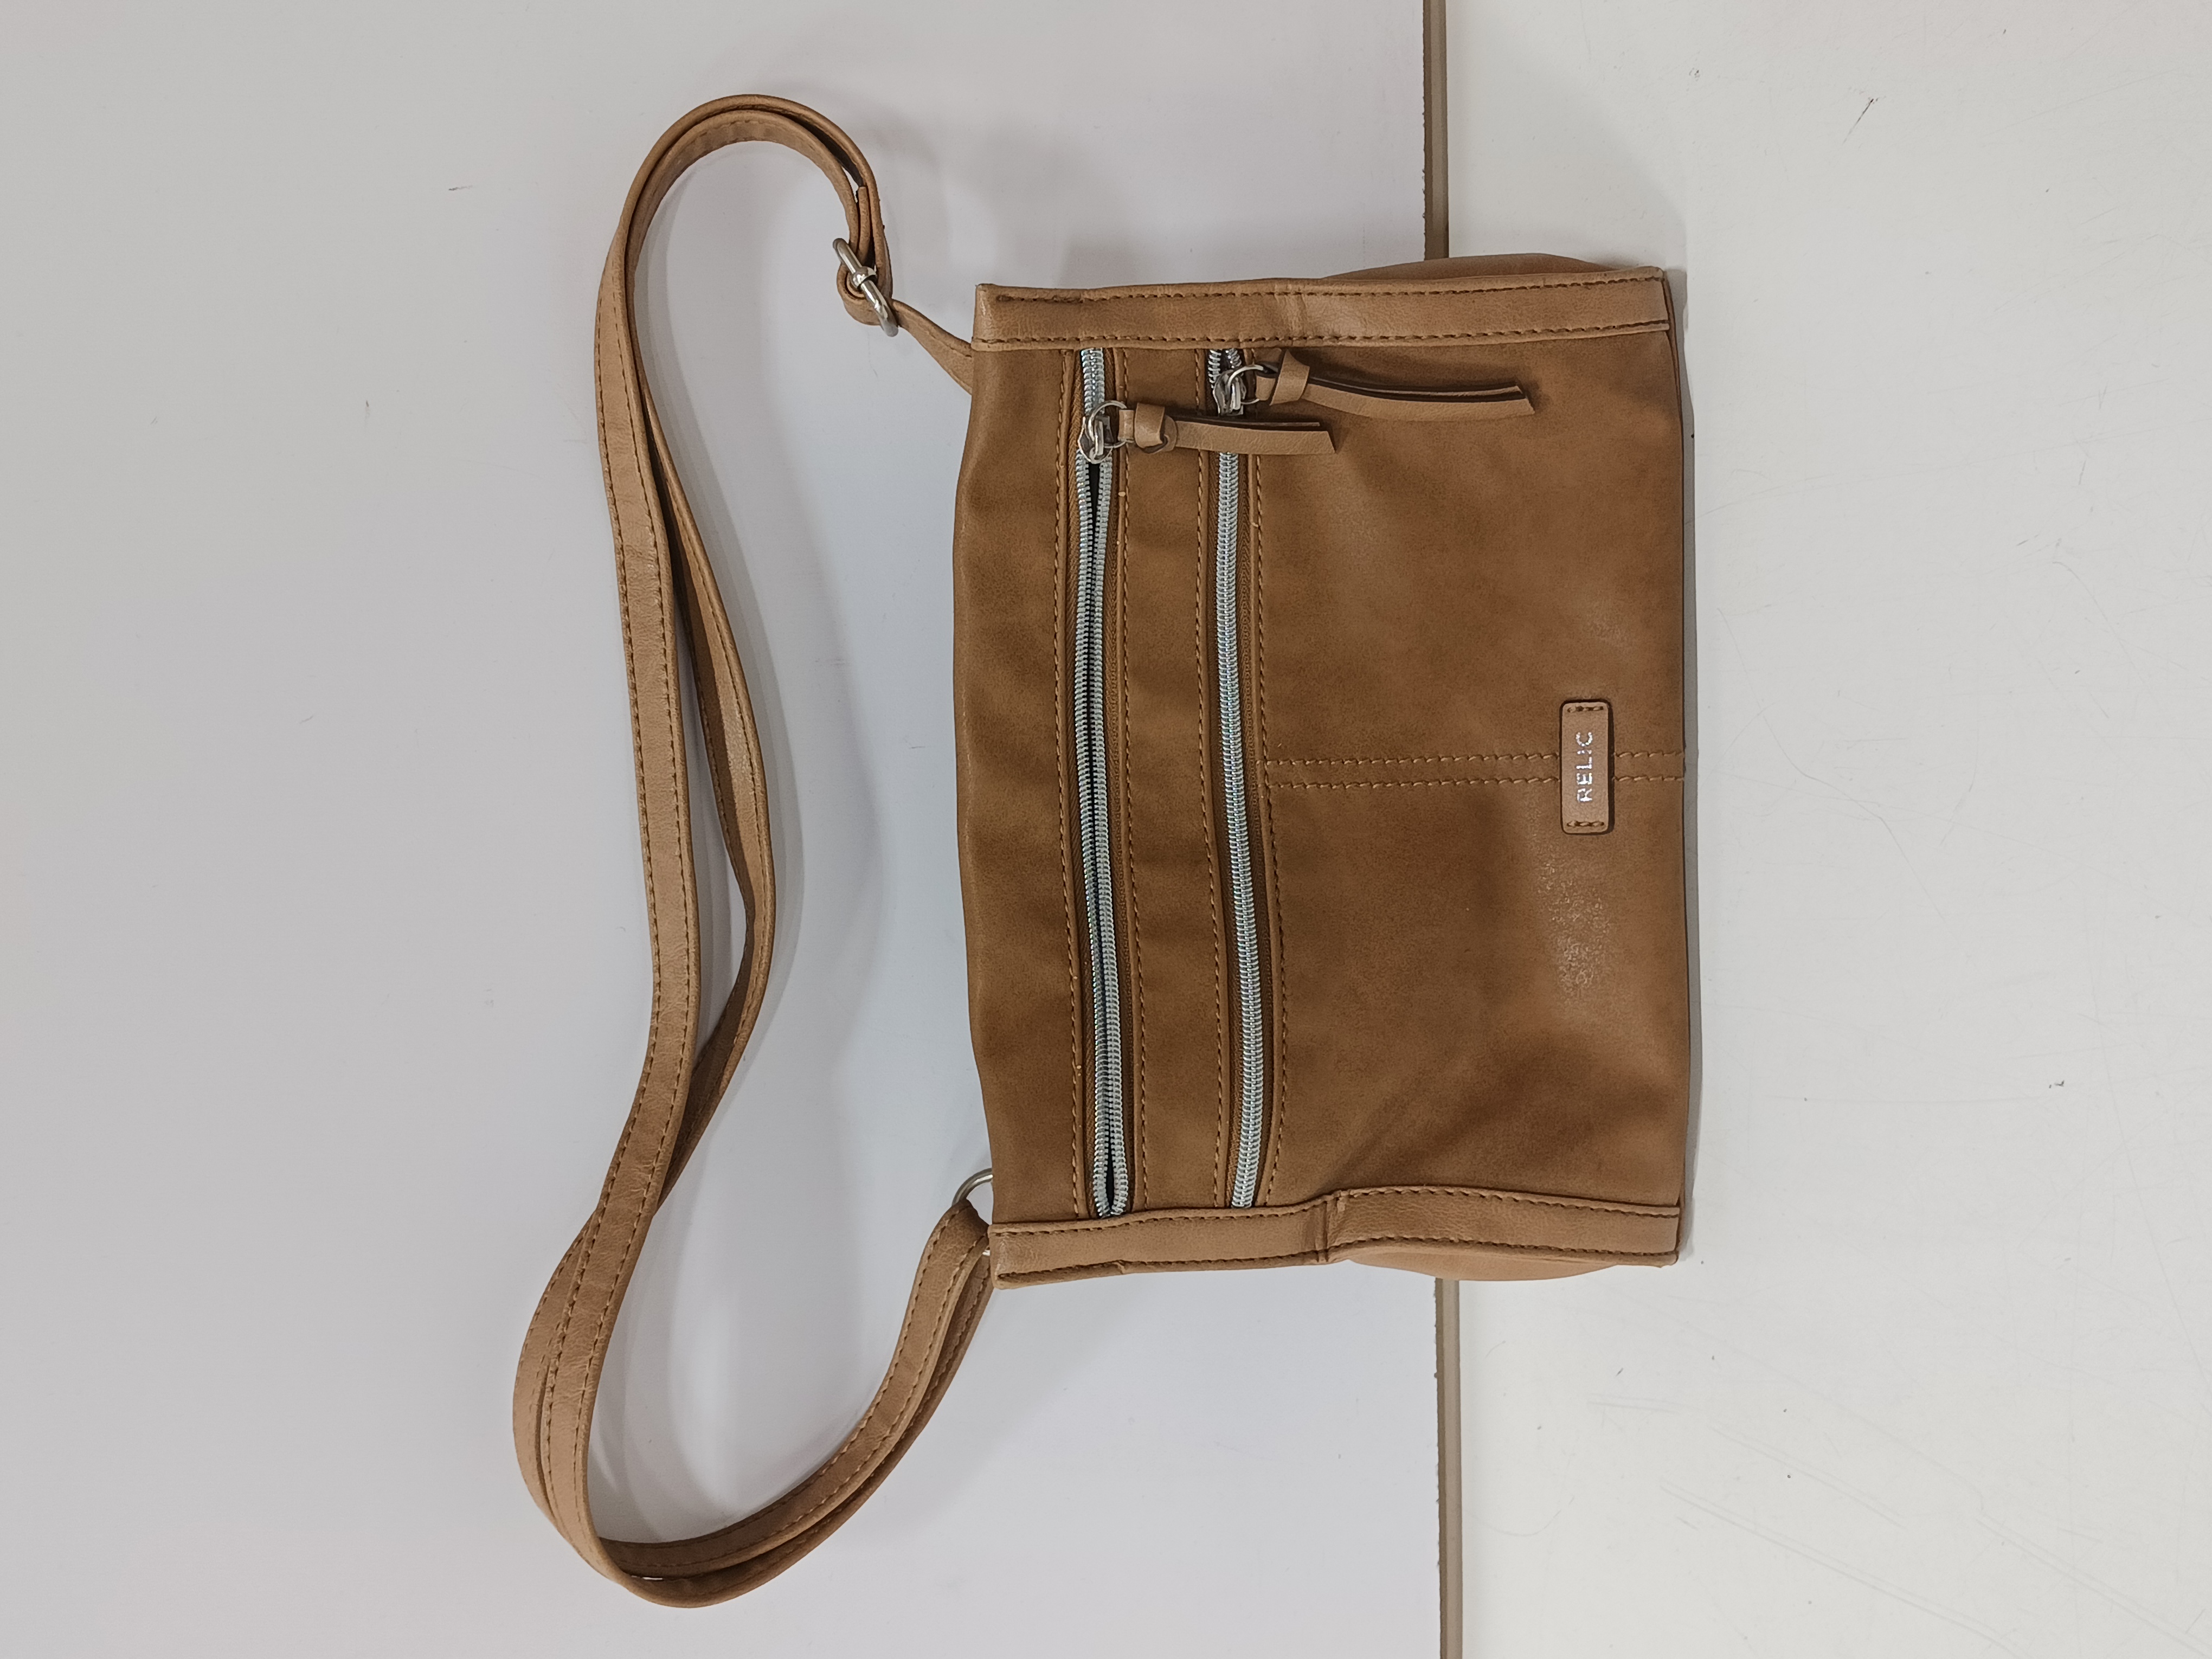  Relic by Fossil: Women's Handbags